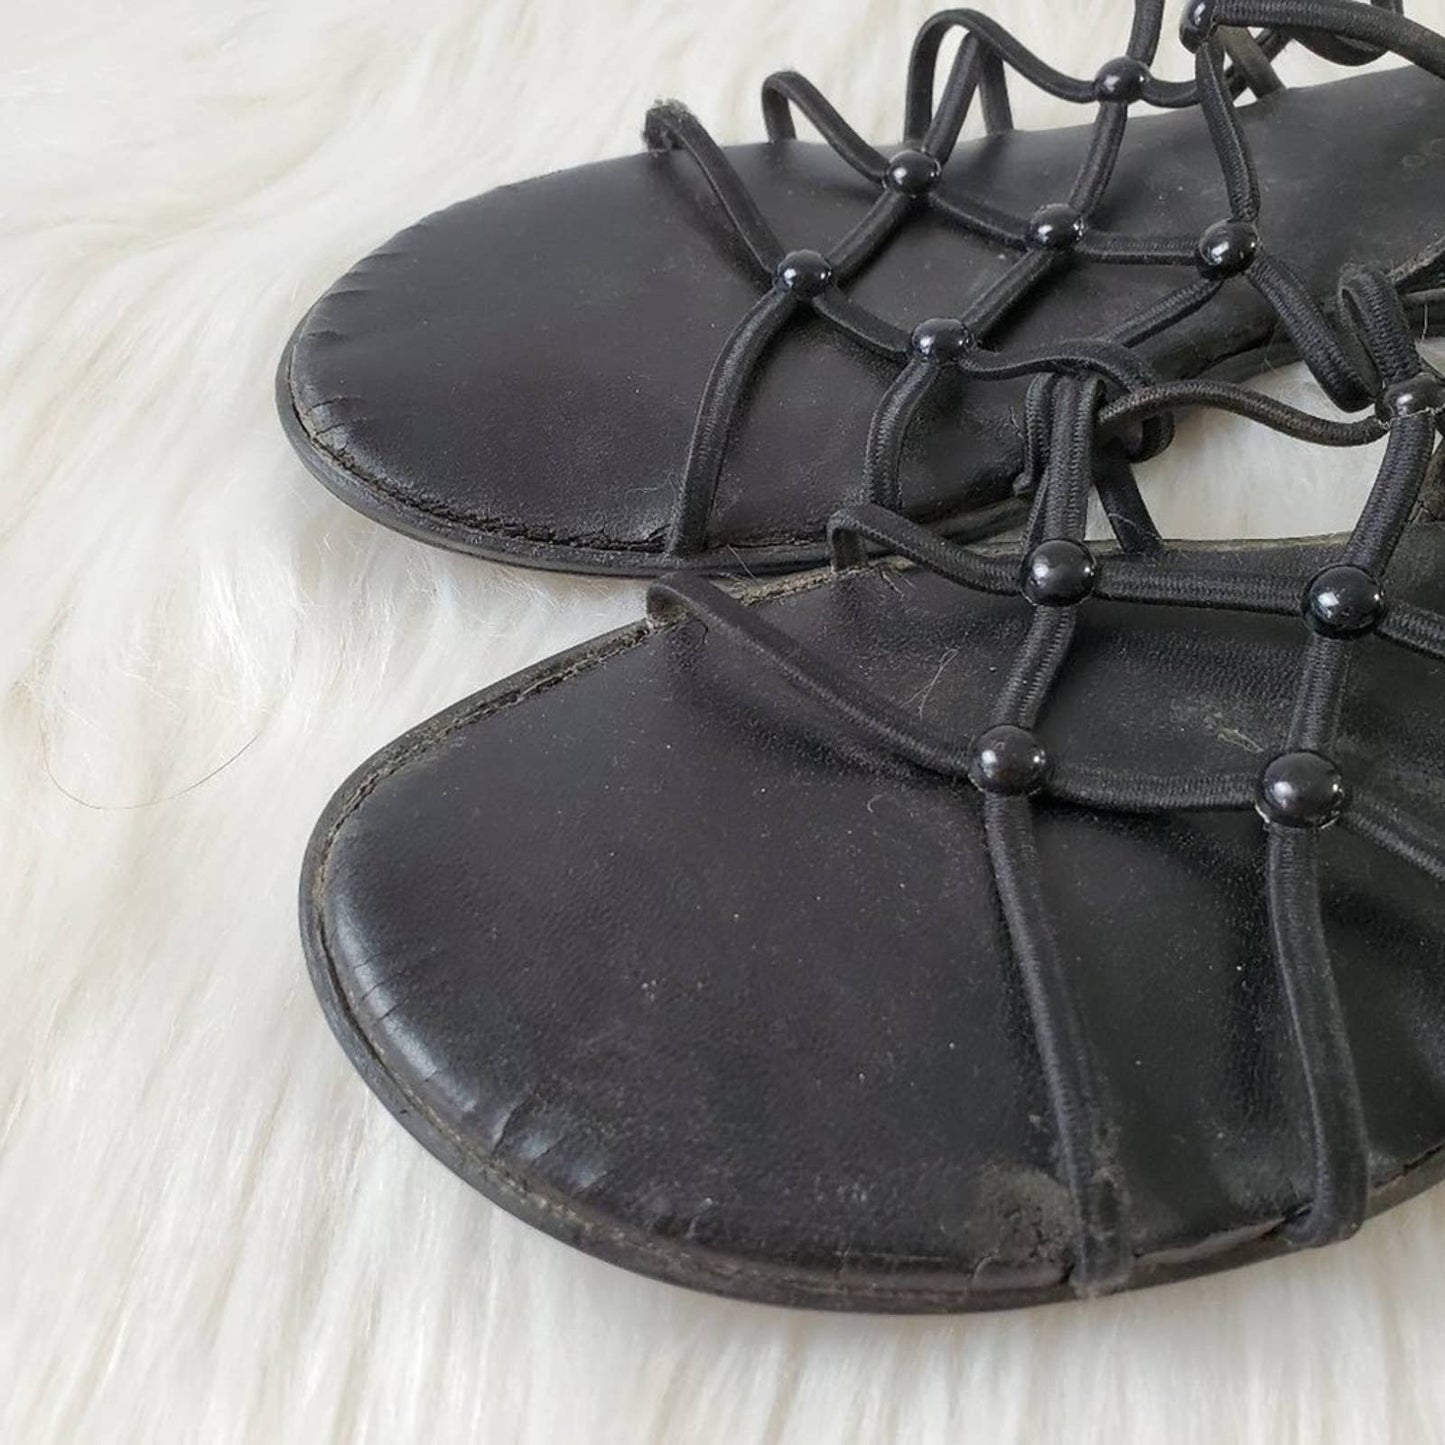 Vintage 80's Calico Leather Gladiator Sandals - 8